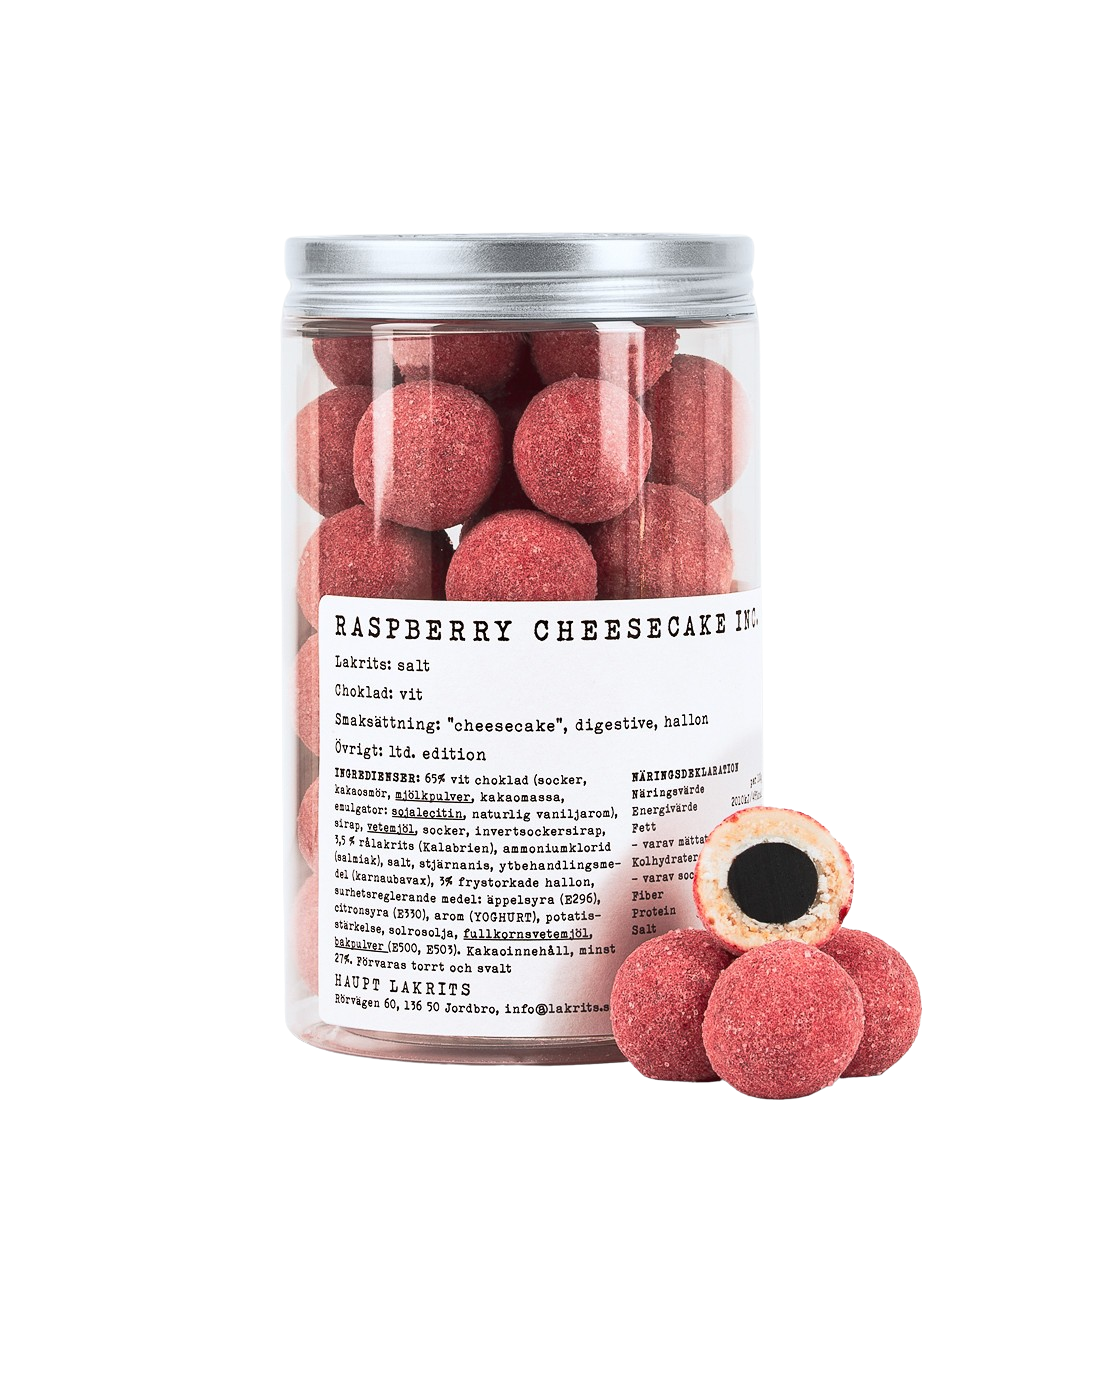 HAUPT LAKRITS Raspberry Cheesecake Inc 250g